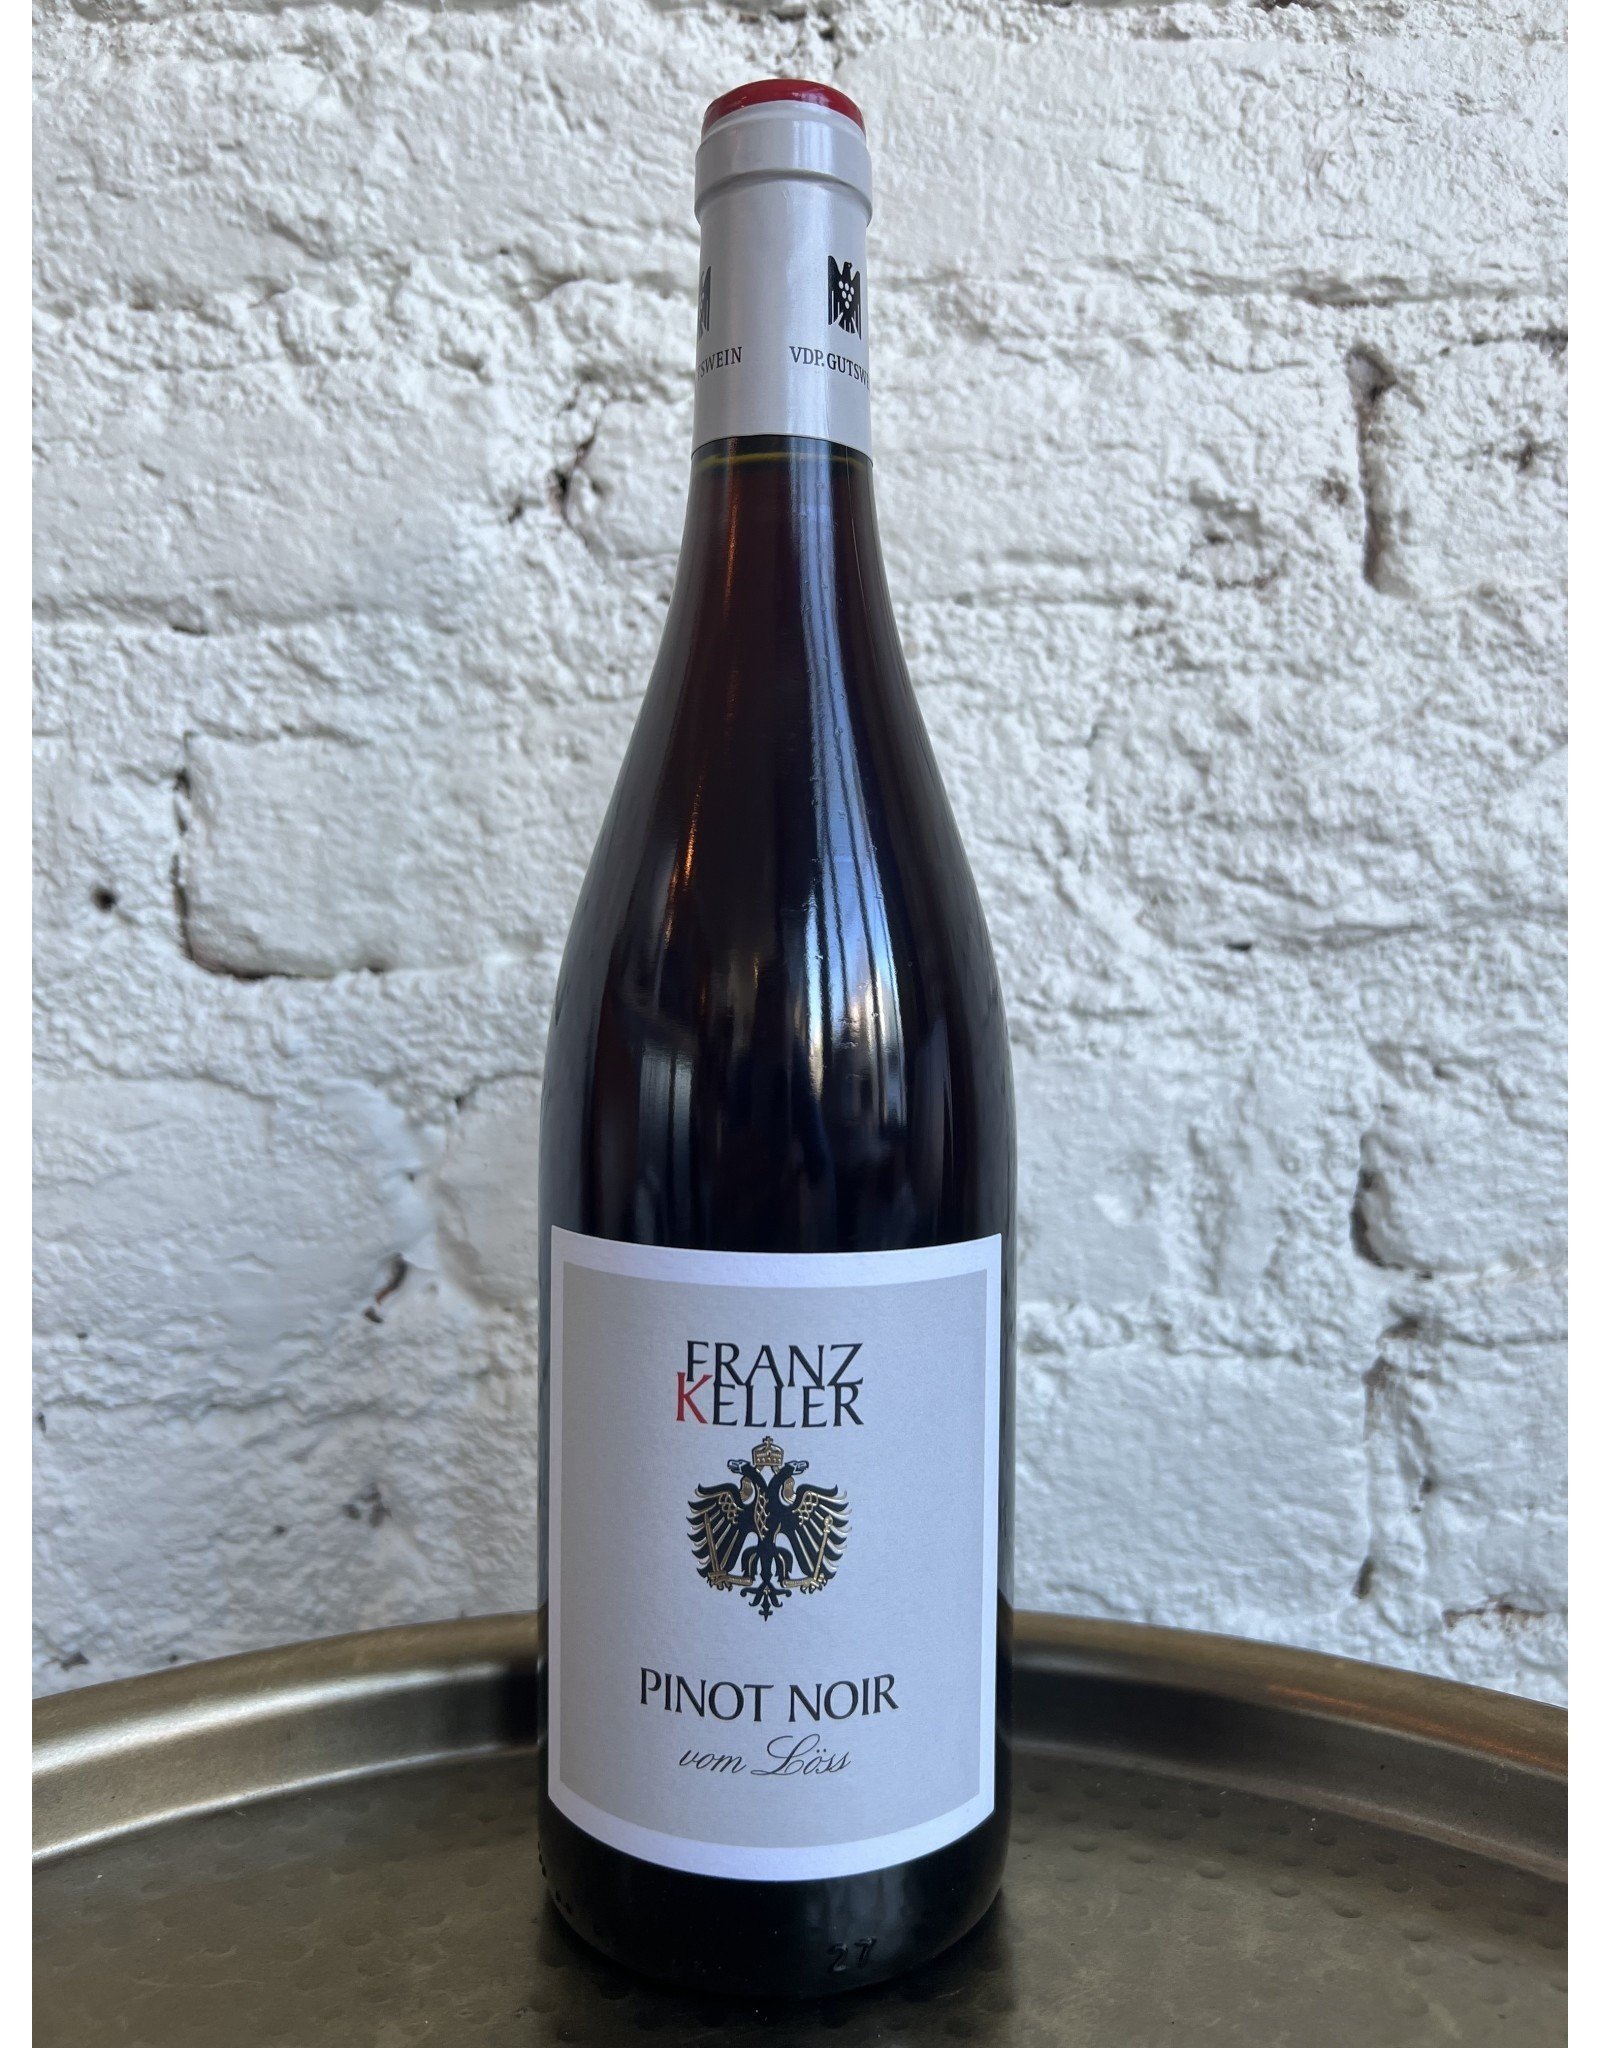 Pinot - Noir, Keller Franz Bottle Baden 2017 House